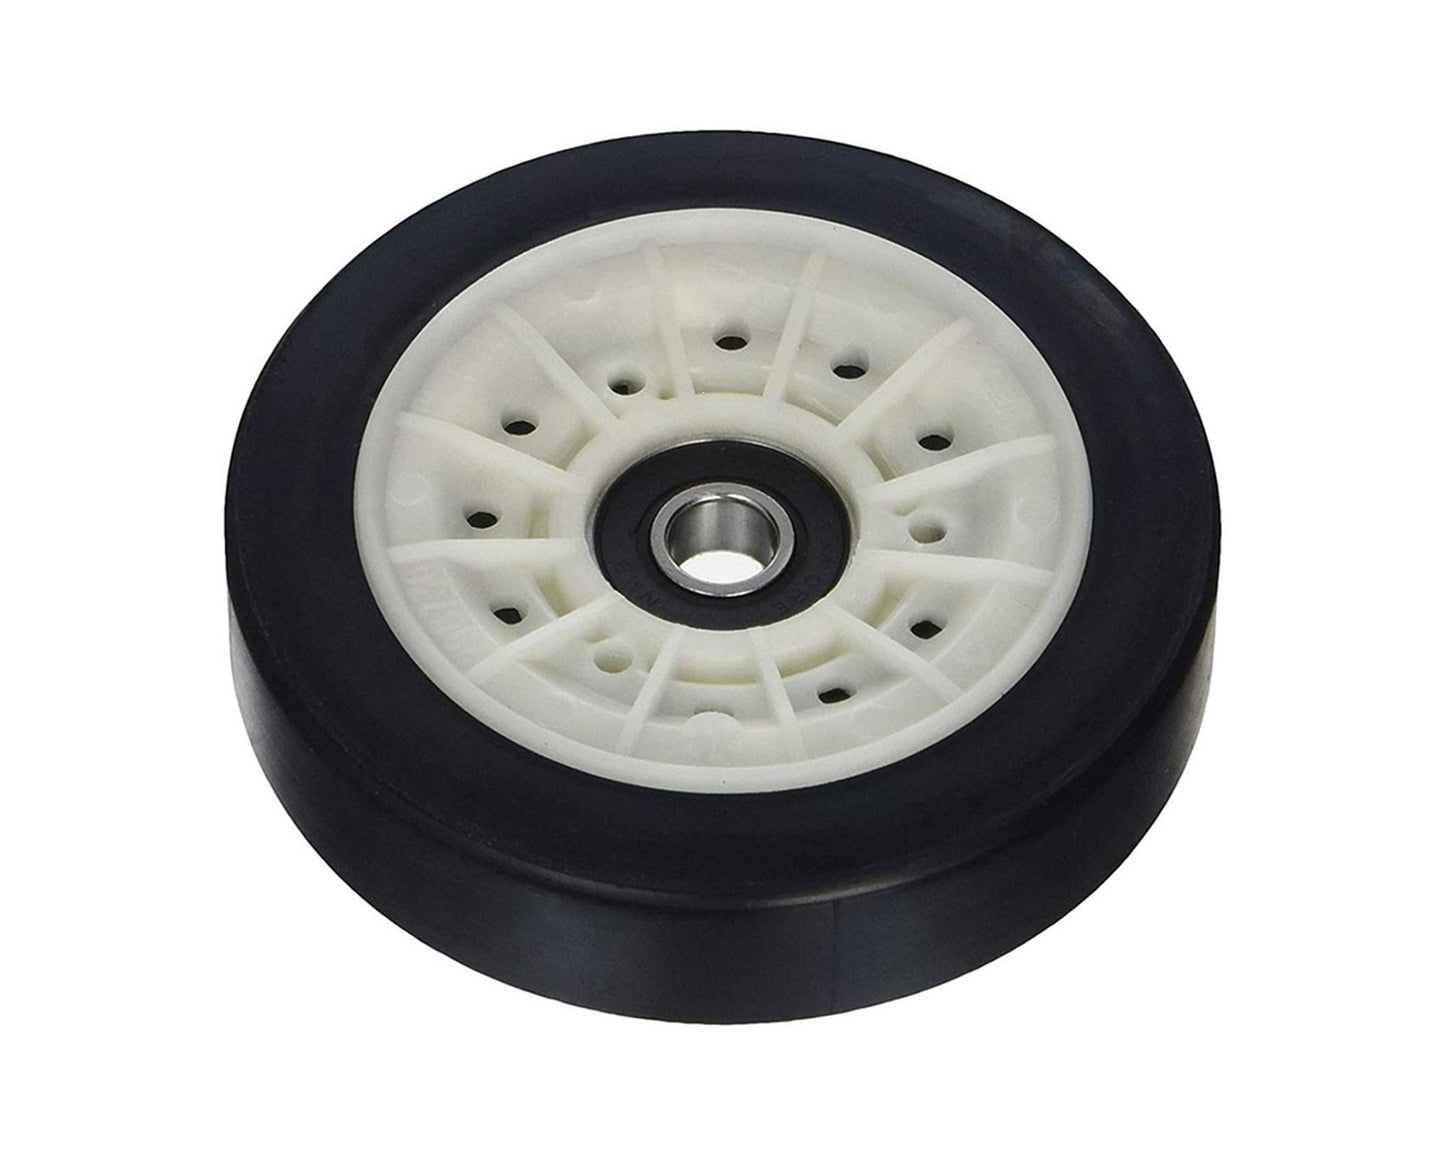 Drum Wheel Pulley Roller Belt Tension for Smeg Tumble Dryer - 697410248, 697410249, 757410261